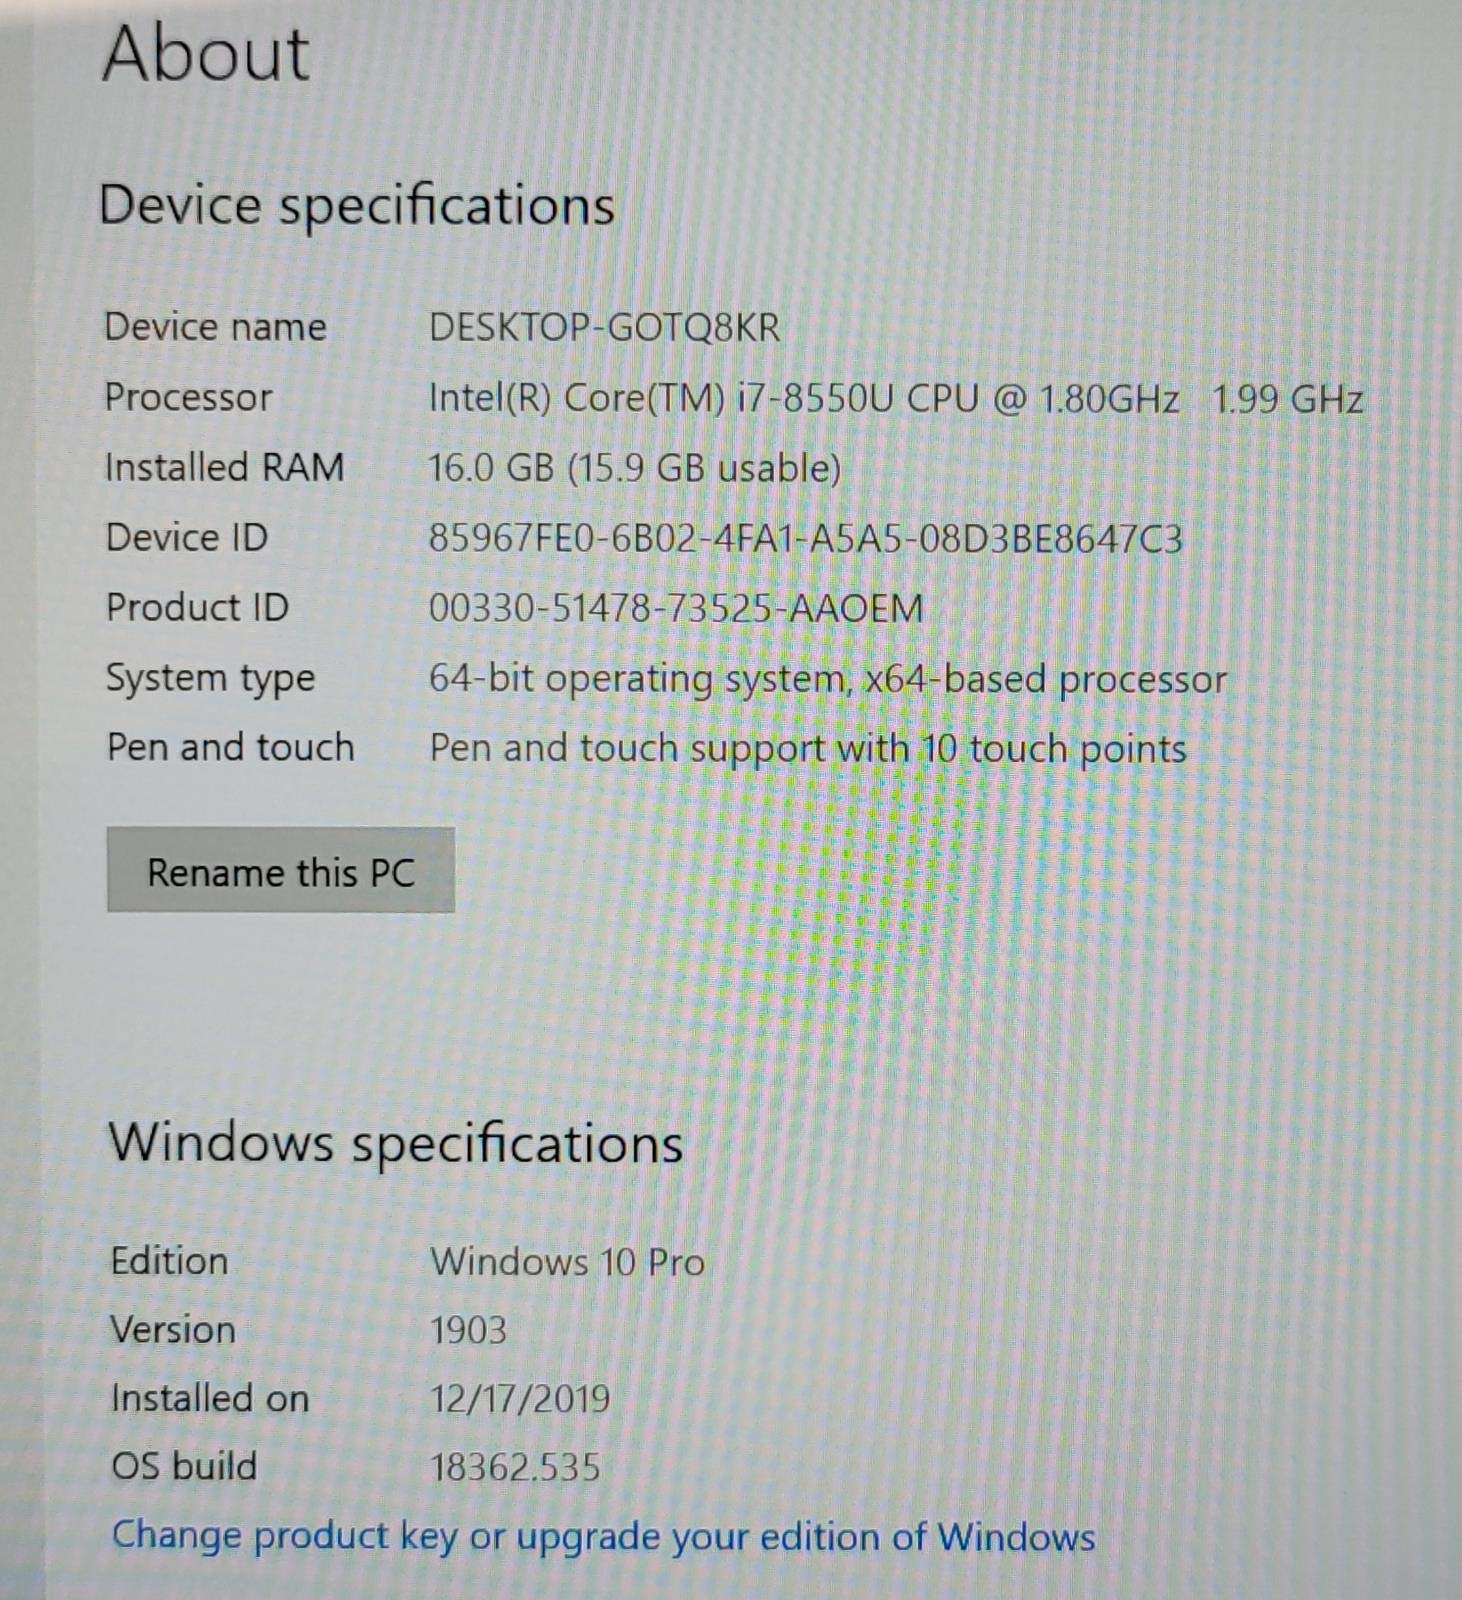 ASUS ZenBook Flip S Touchscreen Convertible Laptop, 13.3” Full HD, 8th Gen Intel Core i7 Processor, 16GB DDR3, 512GB SSD, Backlit KB, Fingerprint, Windows 10 Pro - UX370UA-XH74T-BL, Royal Blue